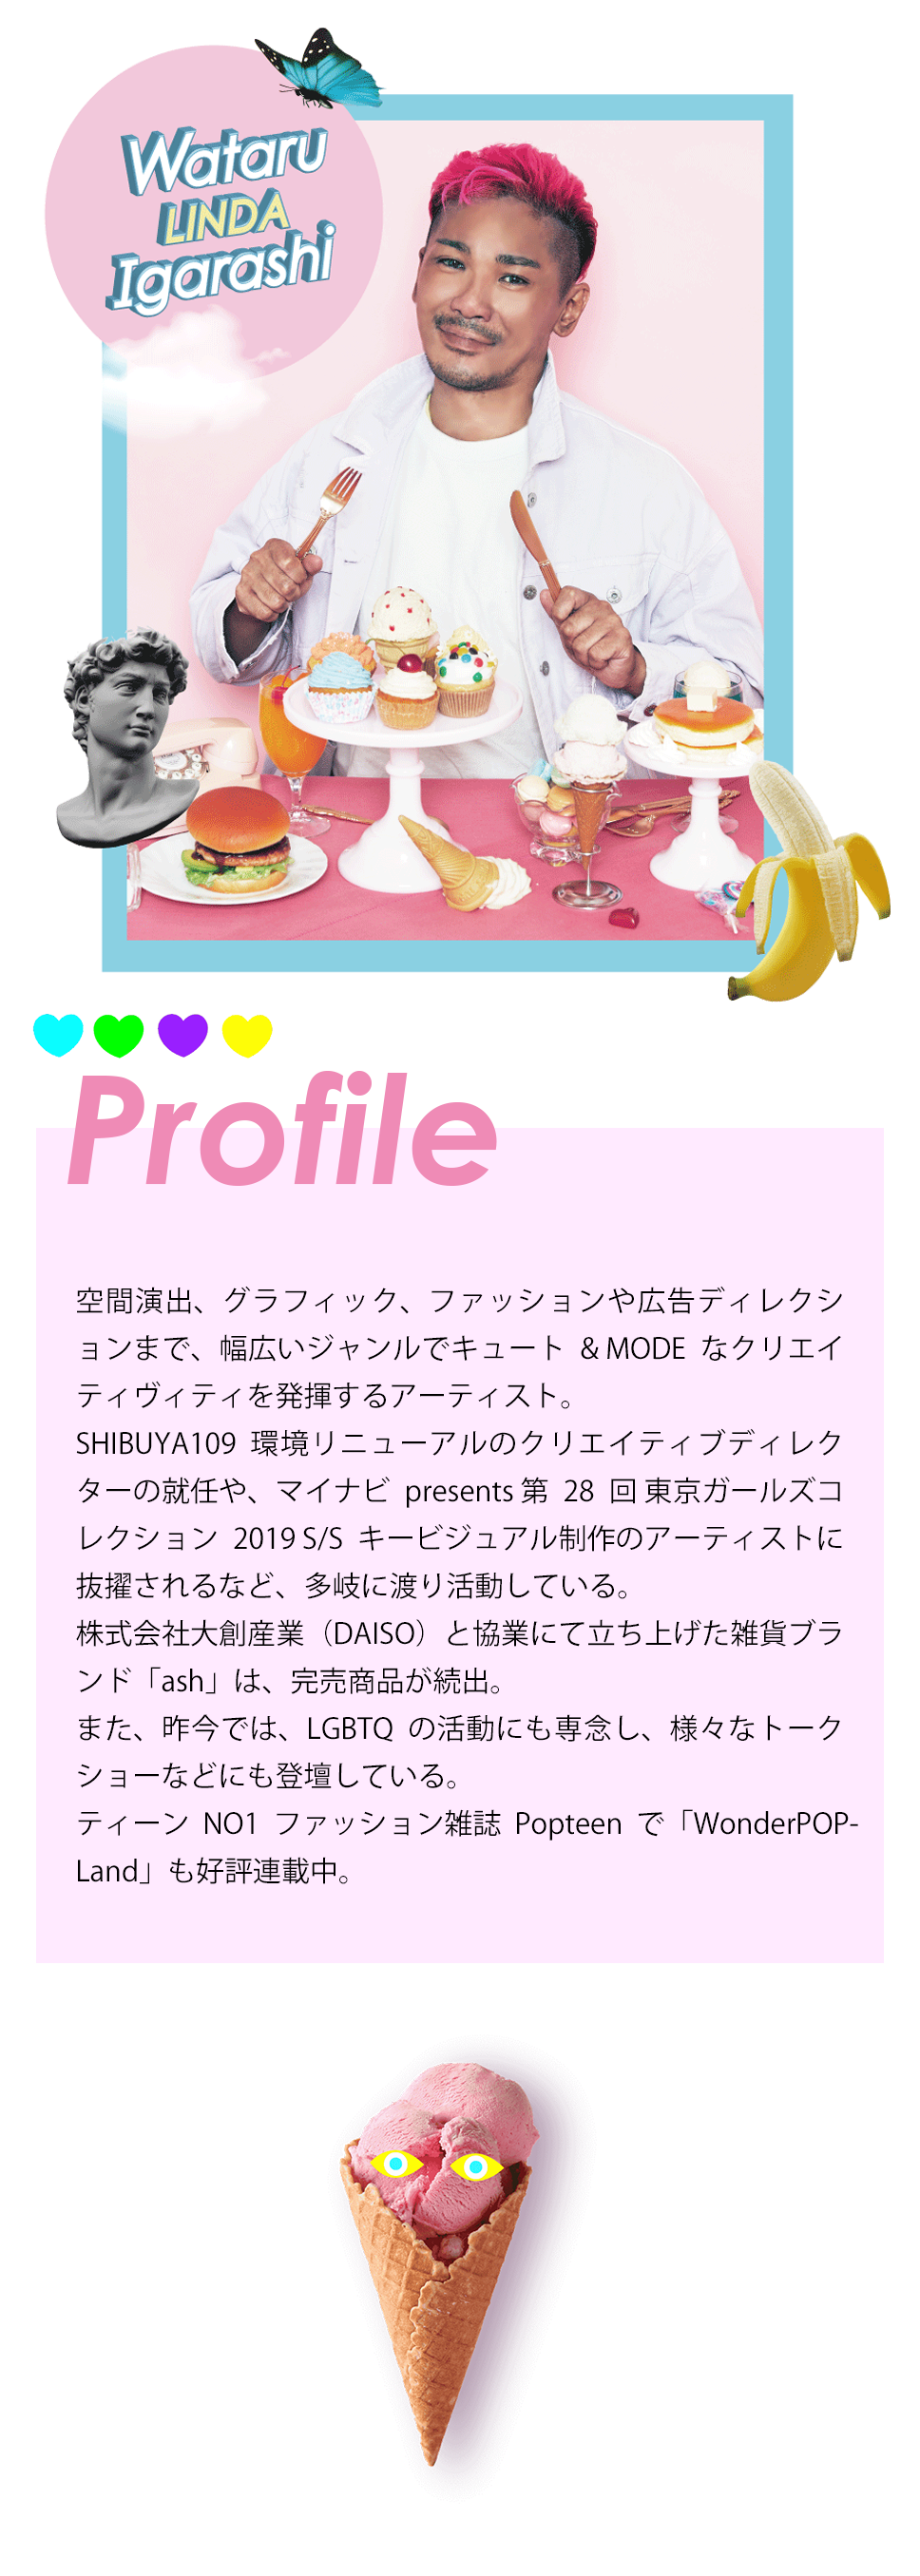 profile_img1